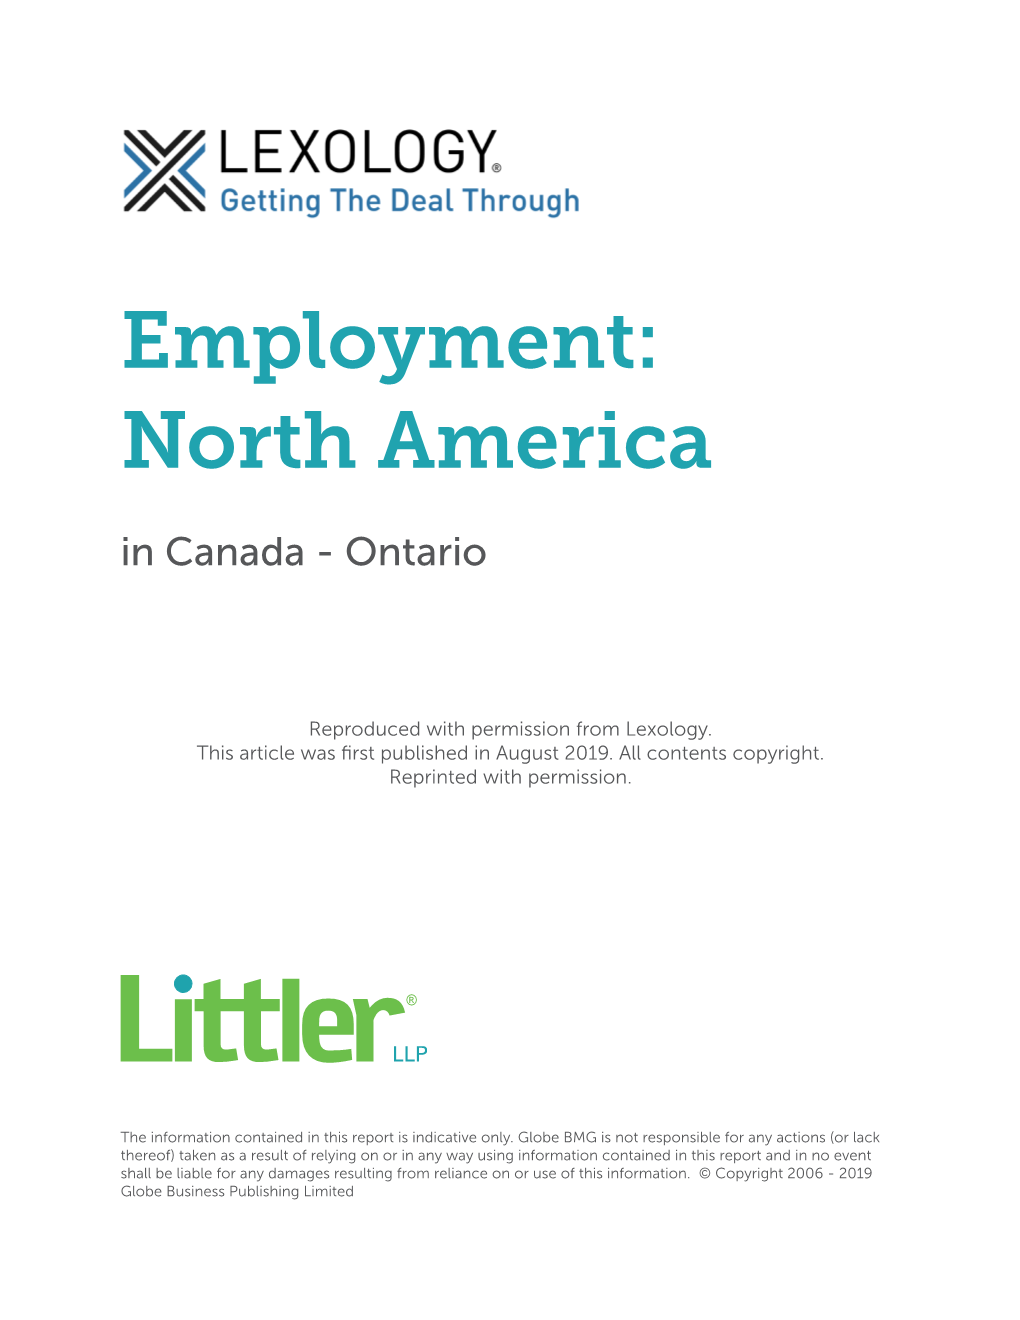 Employment: North America in Canada - Ontario